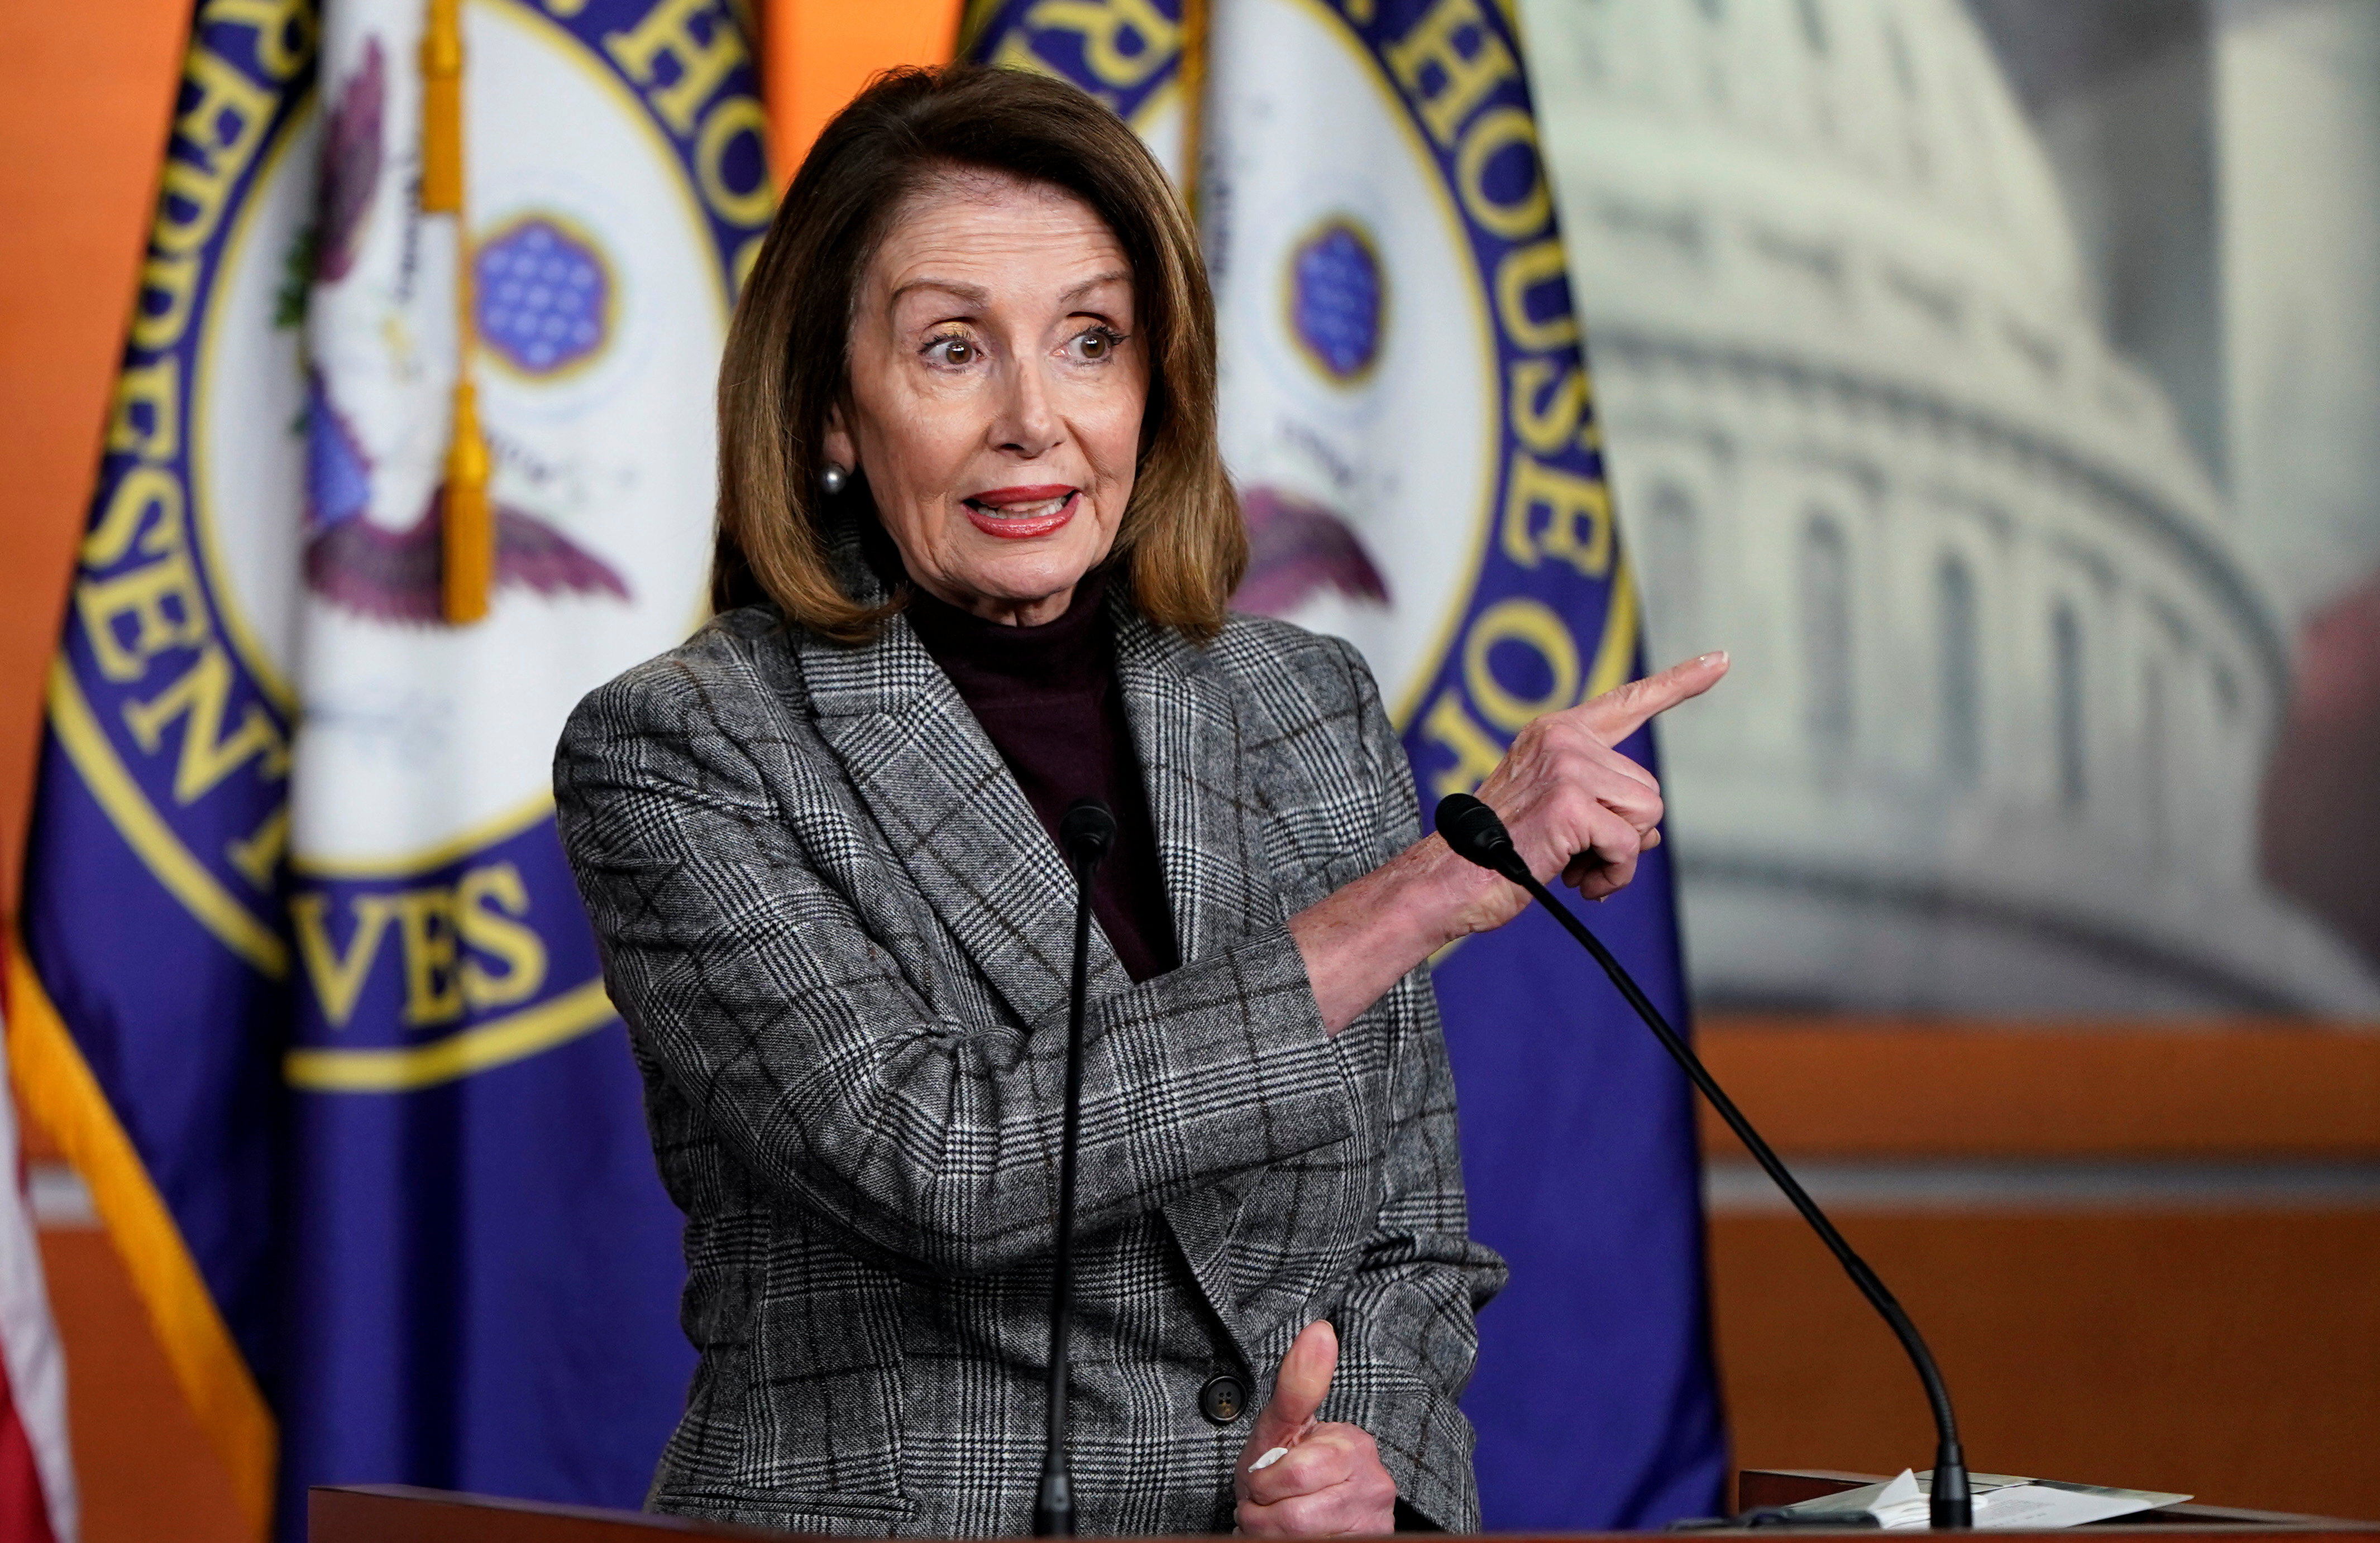 Speaker of the House Nancy Pelosi (D-CA) speaks to the media on Capitol Hill in Washington, U.S., February 28, 2019. REUTERS/Joshua Roberts